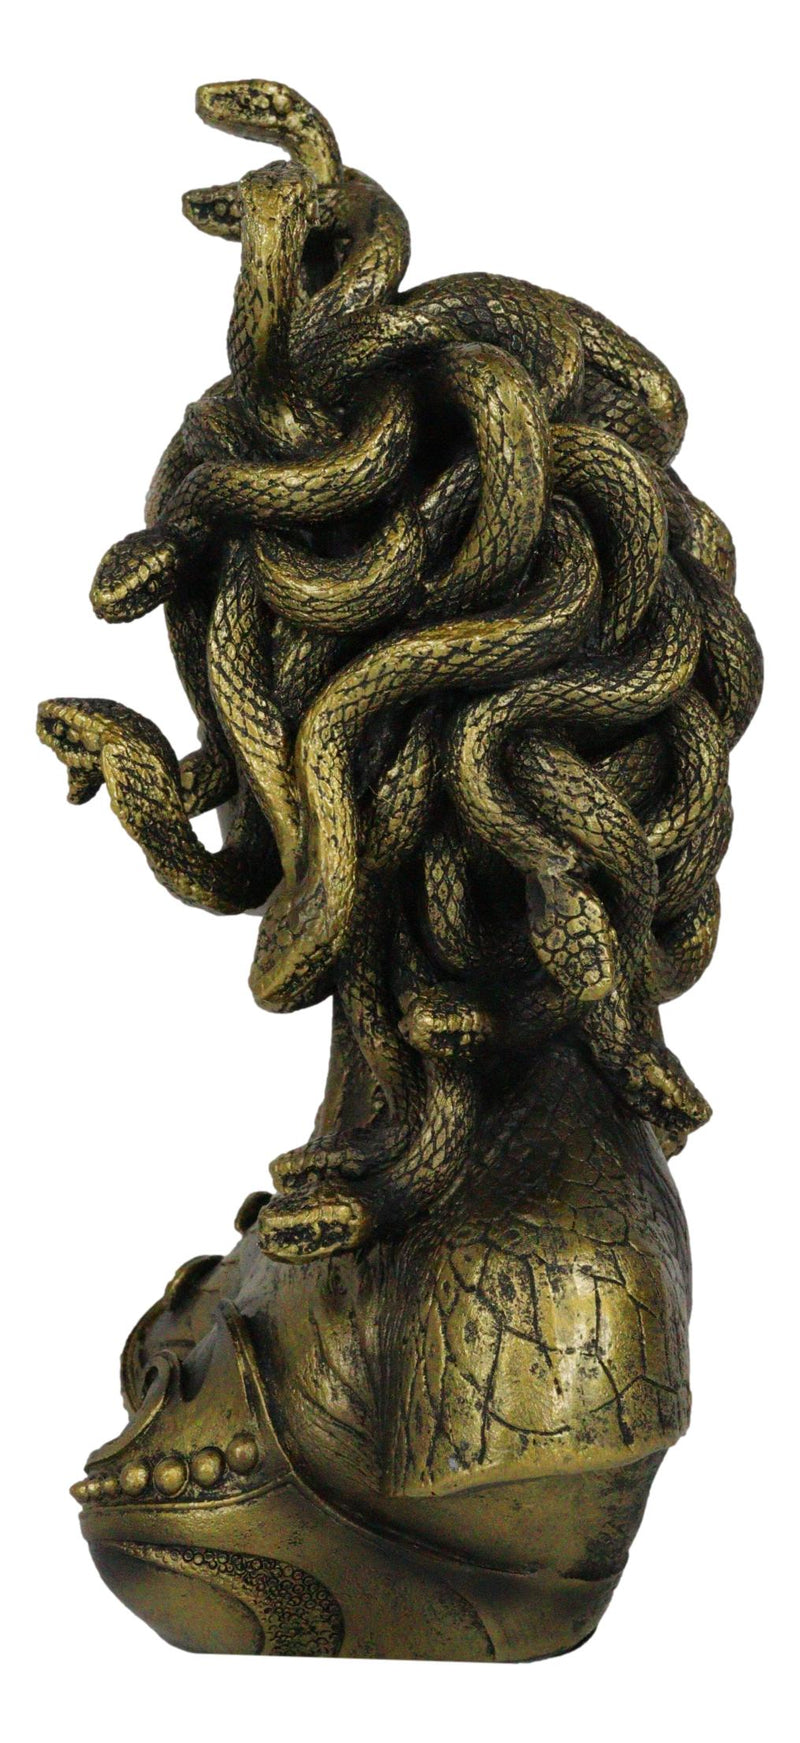 Medusa Ancient Greek Snake-Headed Monster Gorgon Statue Sculpture, Black /  Gold, Height 21 cm/8.27 inches